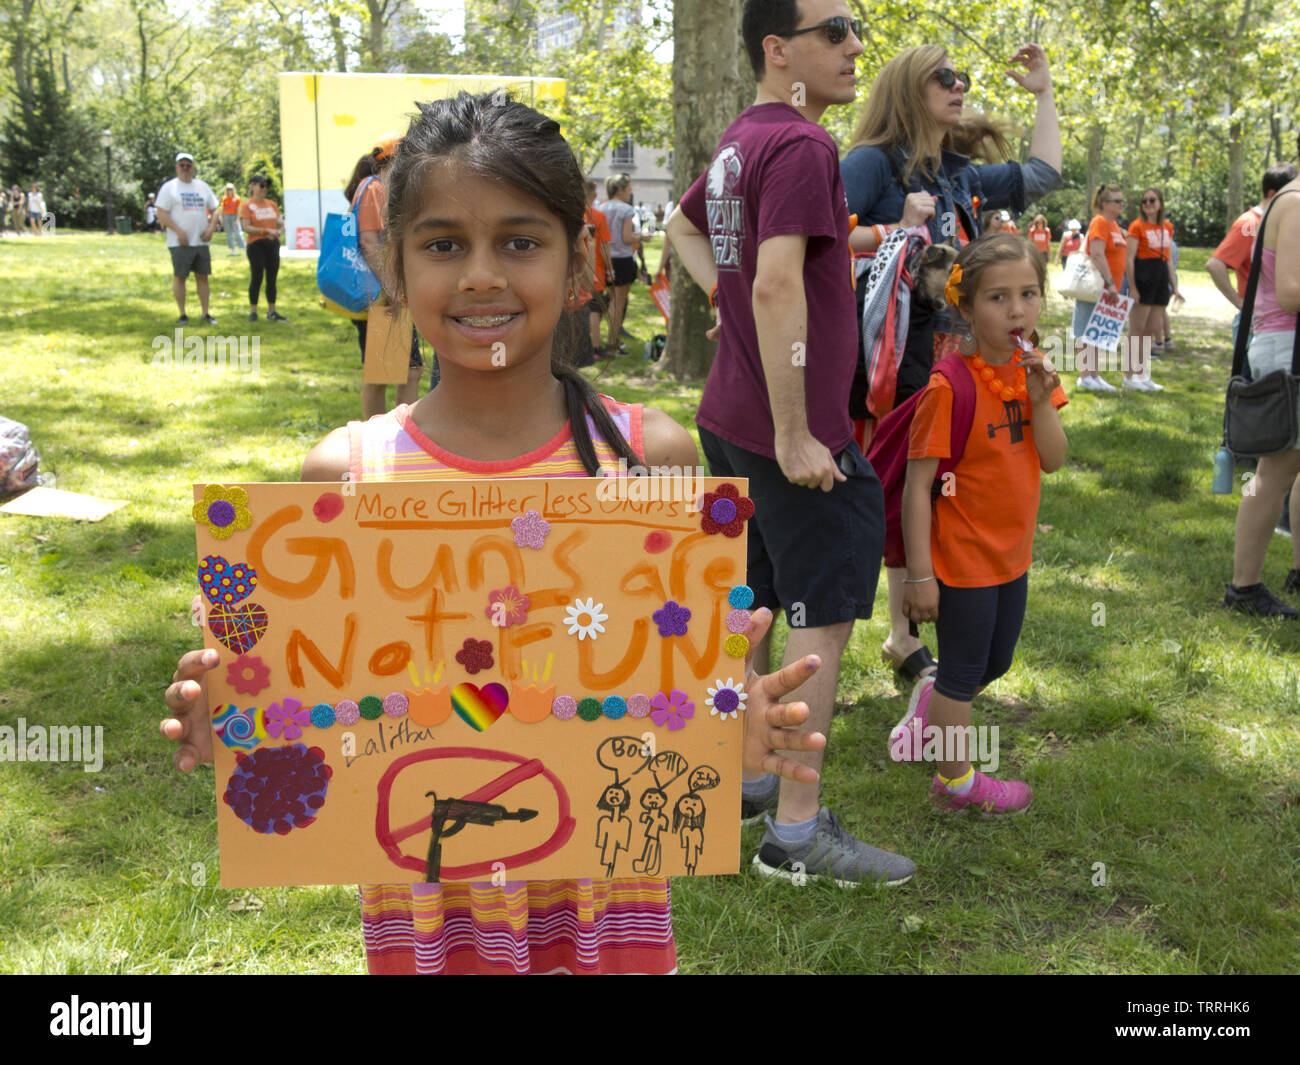 NYC Solidarnosc Walk with Gun violence Survivors at Cadman Plaza à Brooklyn, NY, 8 juin 2019. La fille tient le signe qu'elle a dessiné. Banque D'Images